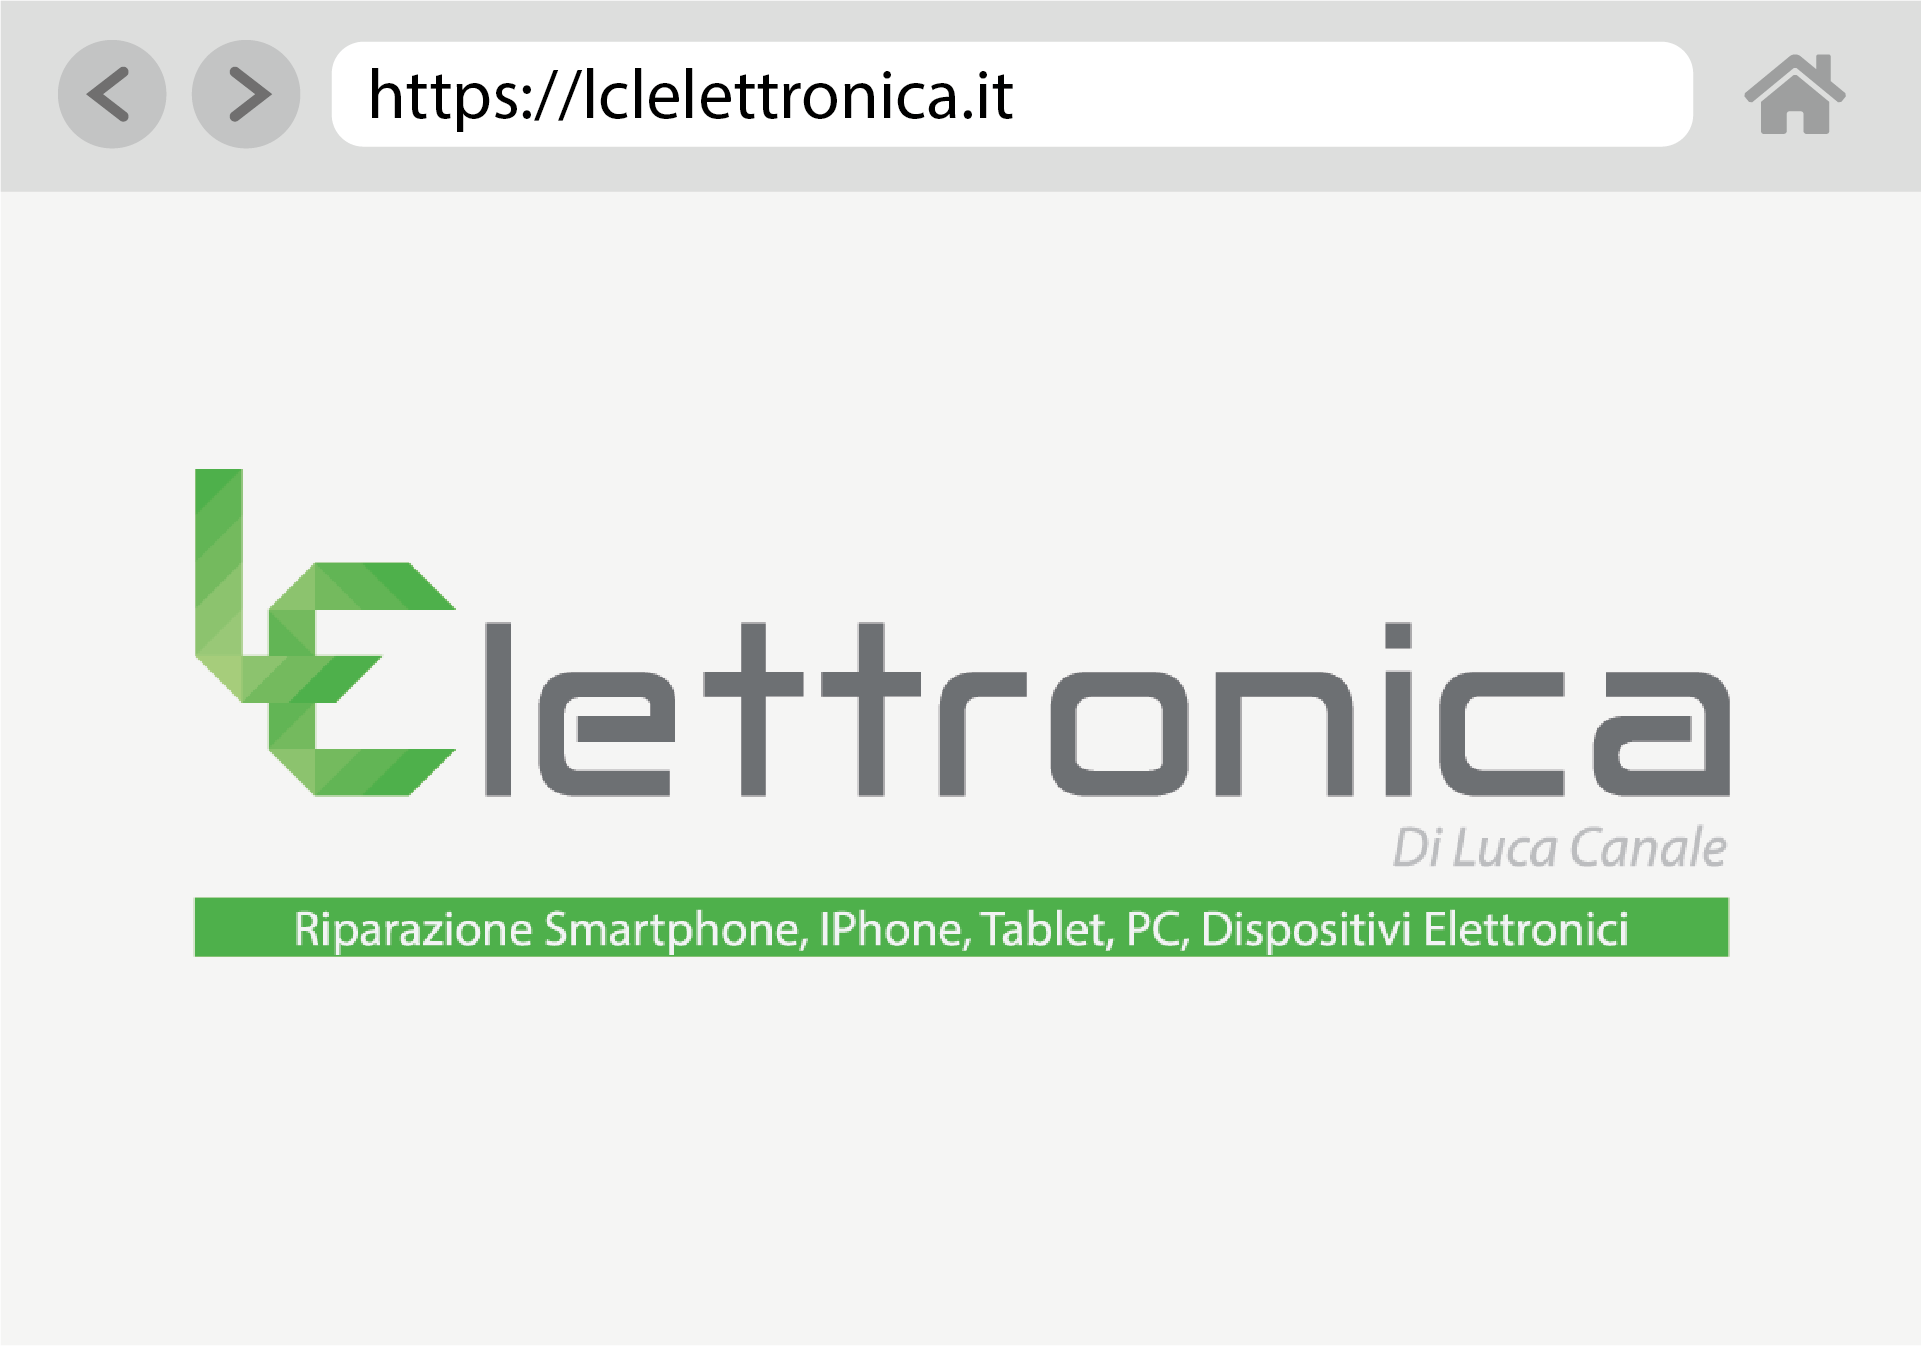 LC Elettronica